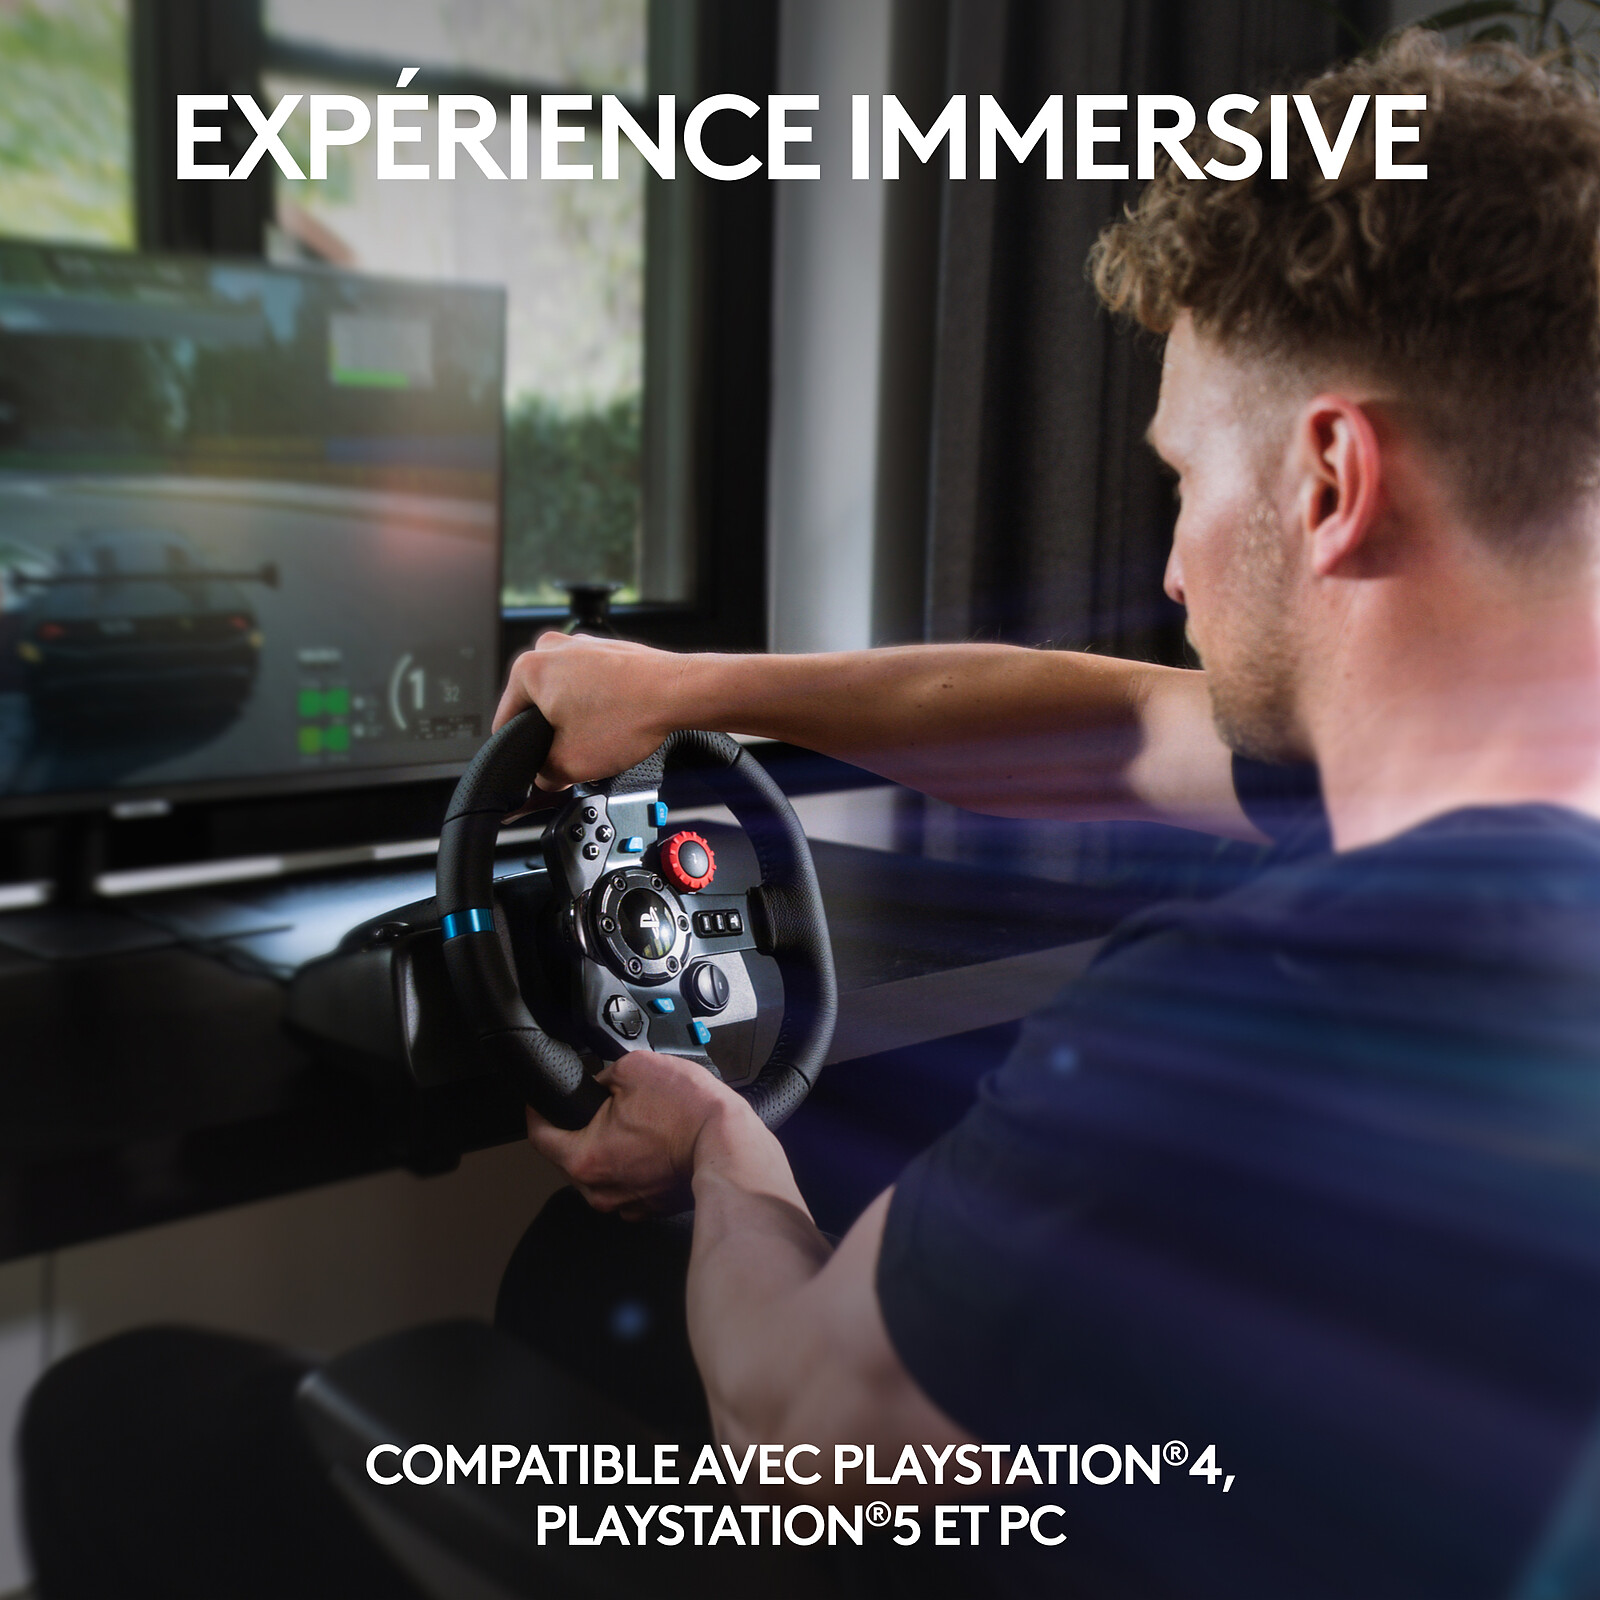 Logitech G29 Driving Force - PC game racing wheel - LDLC 3-year